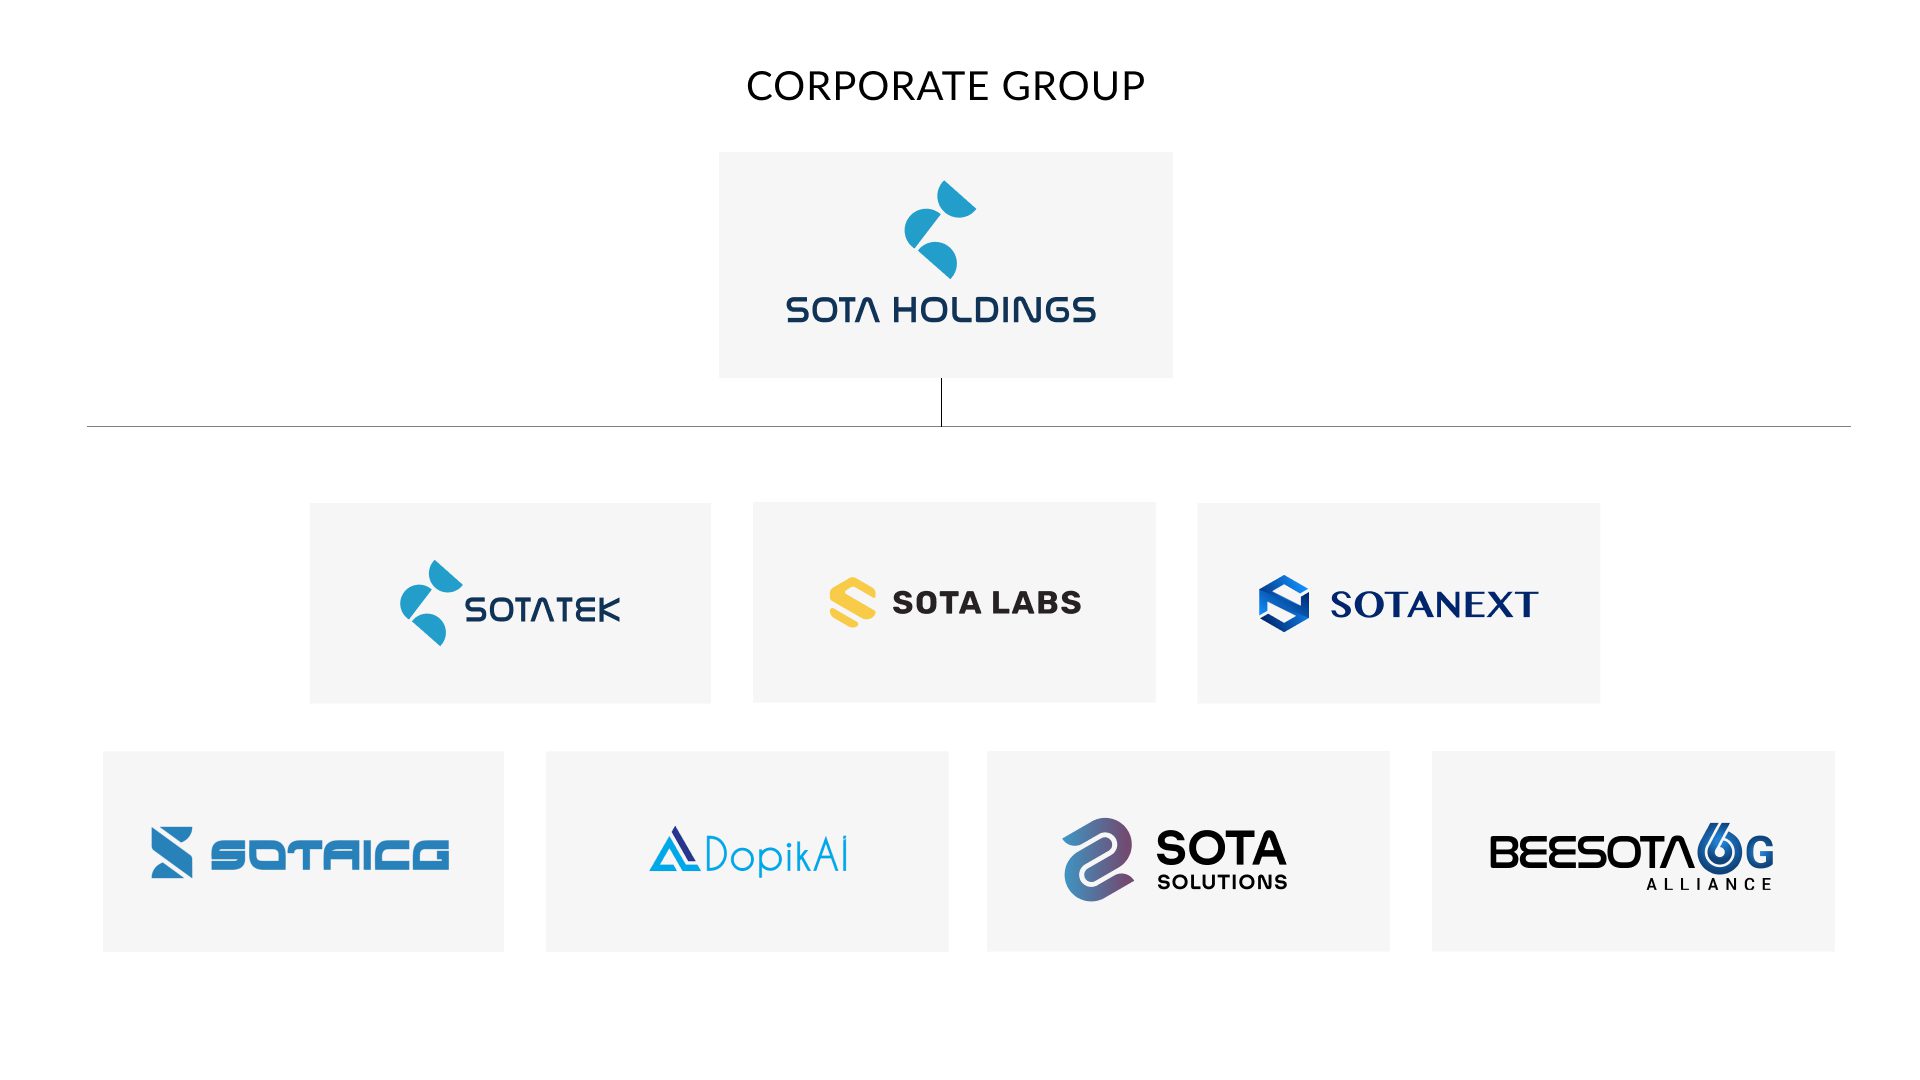 Sota Holdings